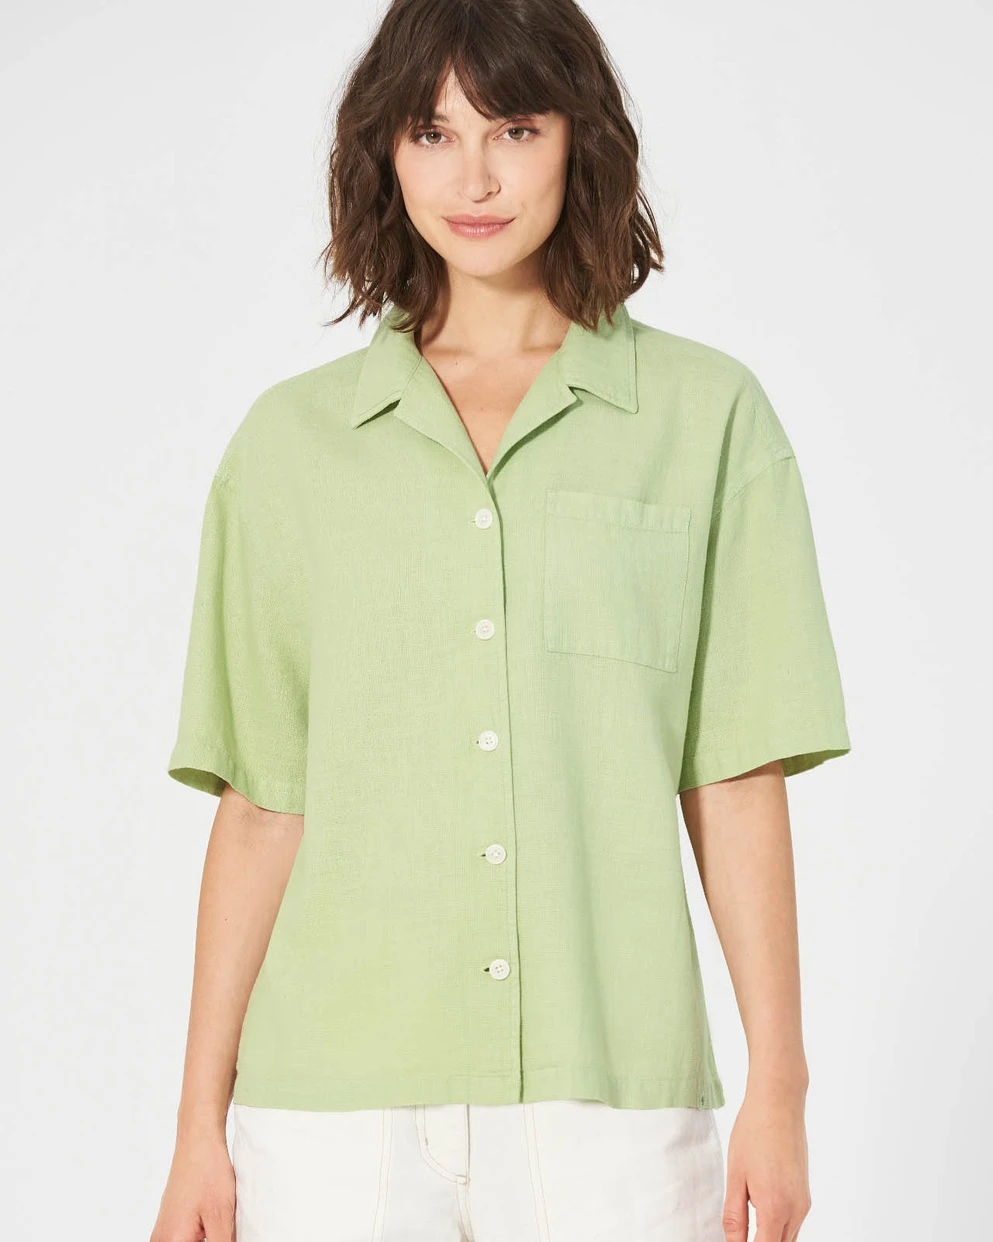 Women's short-sleeved shirt in hemp and organic cotton_93572